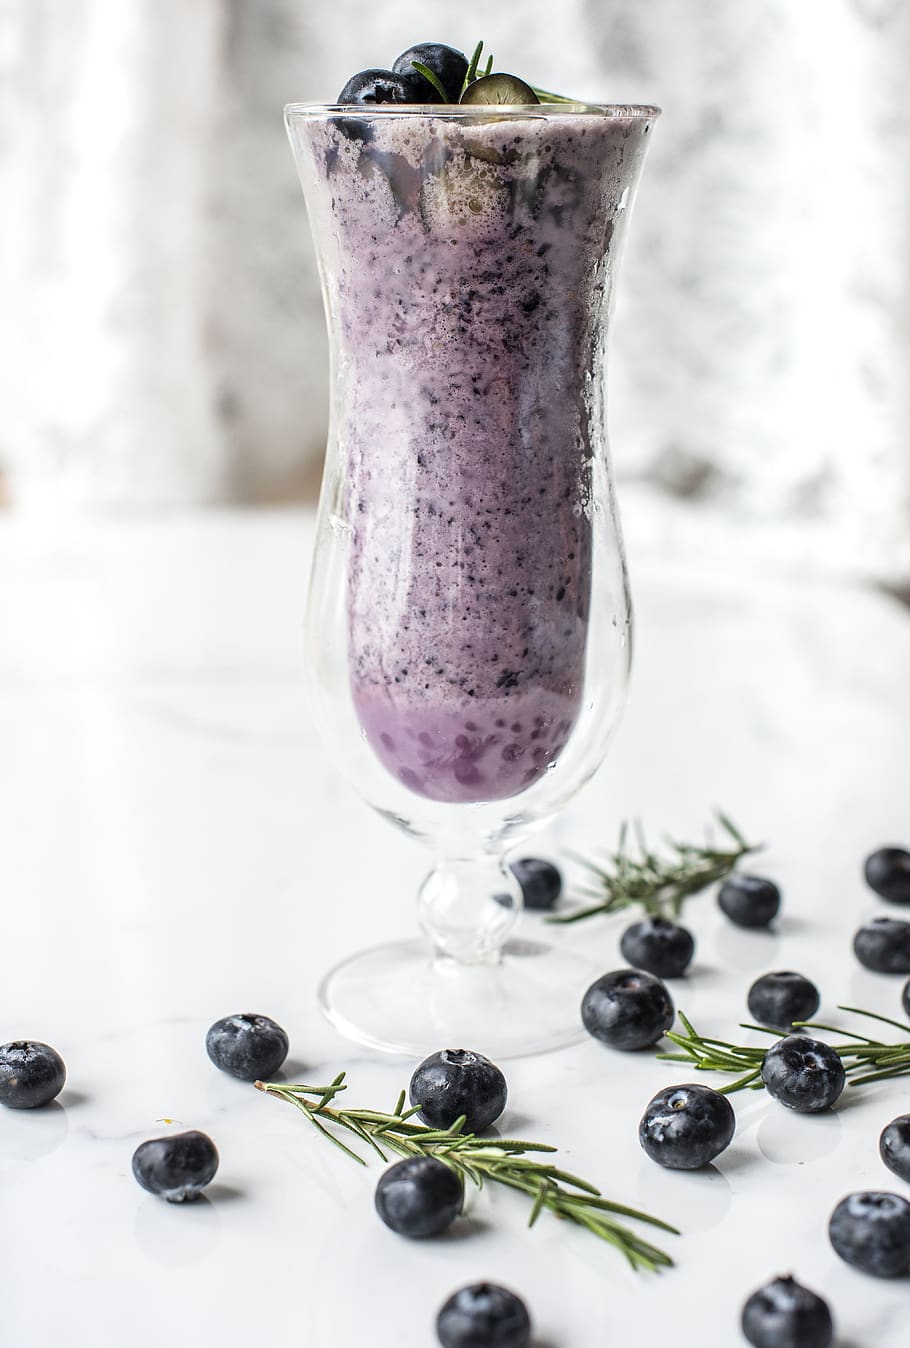 antioxidant, beverage, blended, blueberries, blueberry, blueberry smoothie